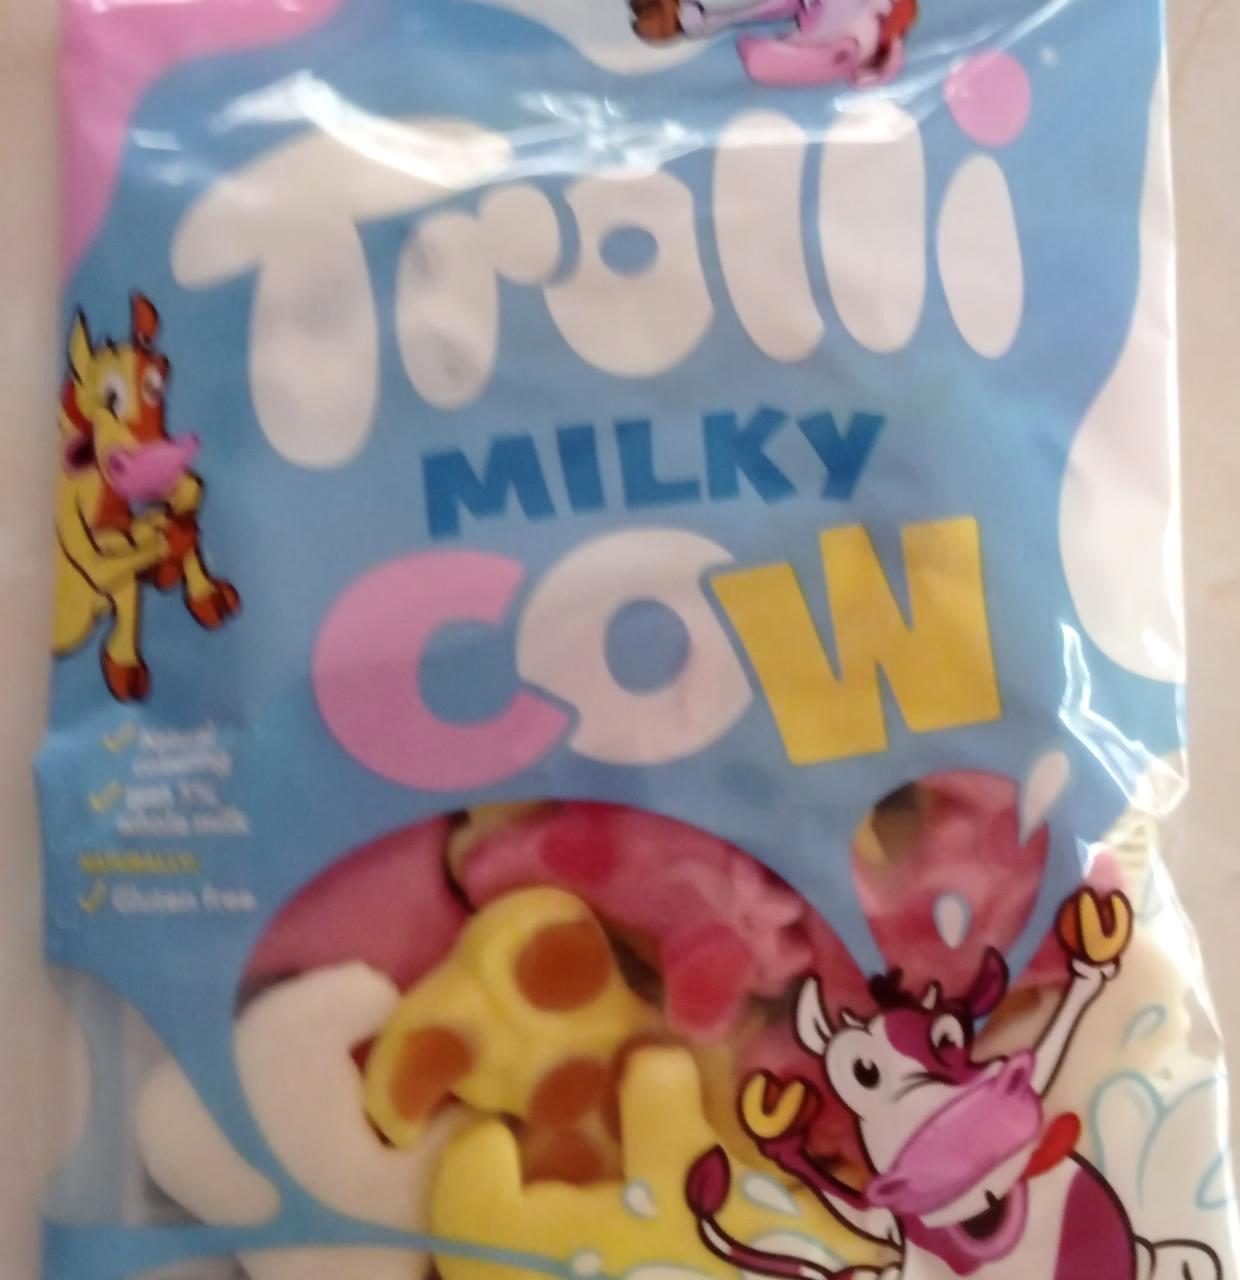 Képek - Trolli milky cow gumicukor